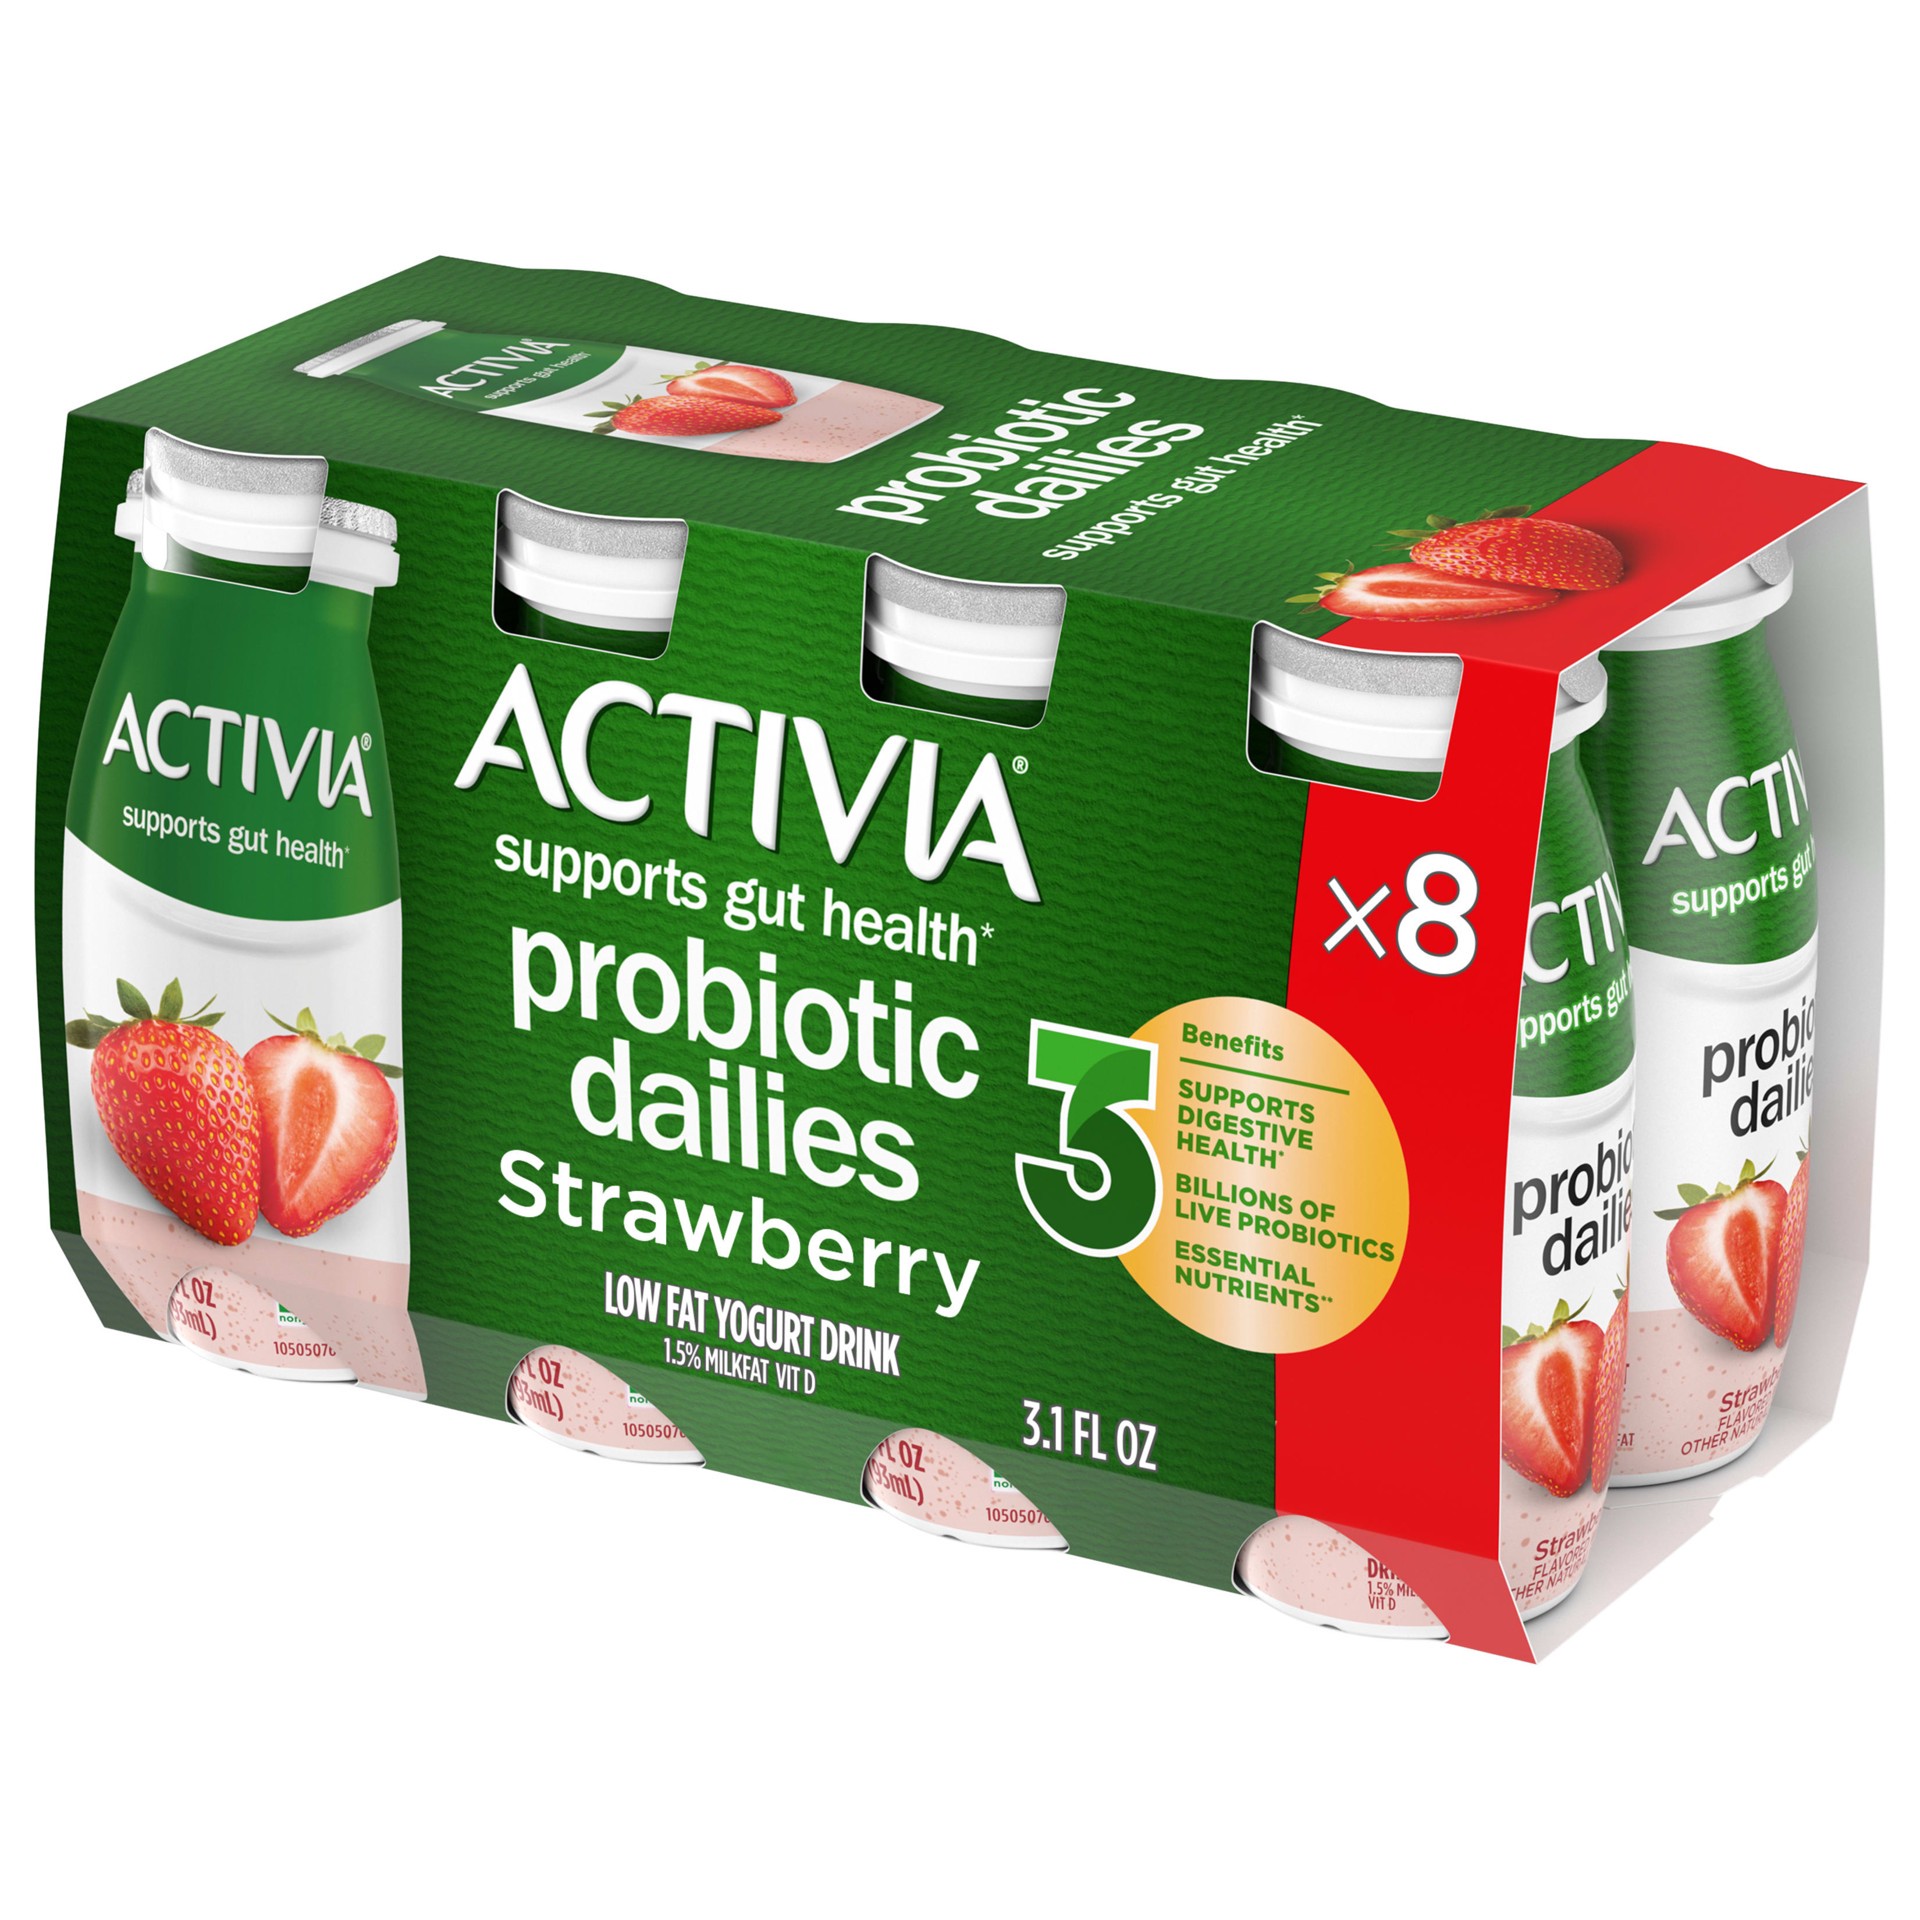 slide 1 of 11, Activia Probiotic Dailies Strawberry Lowfat Yogurt Drinks, Delicious Daily Probiotic Yogurt Smoothie Drinks to Help Support Gut Health, 8 Ct, 3.1 FL OZ, 8 ct; 3.1 fl oz